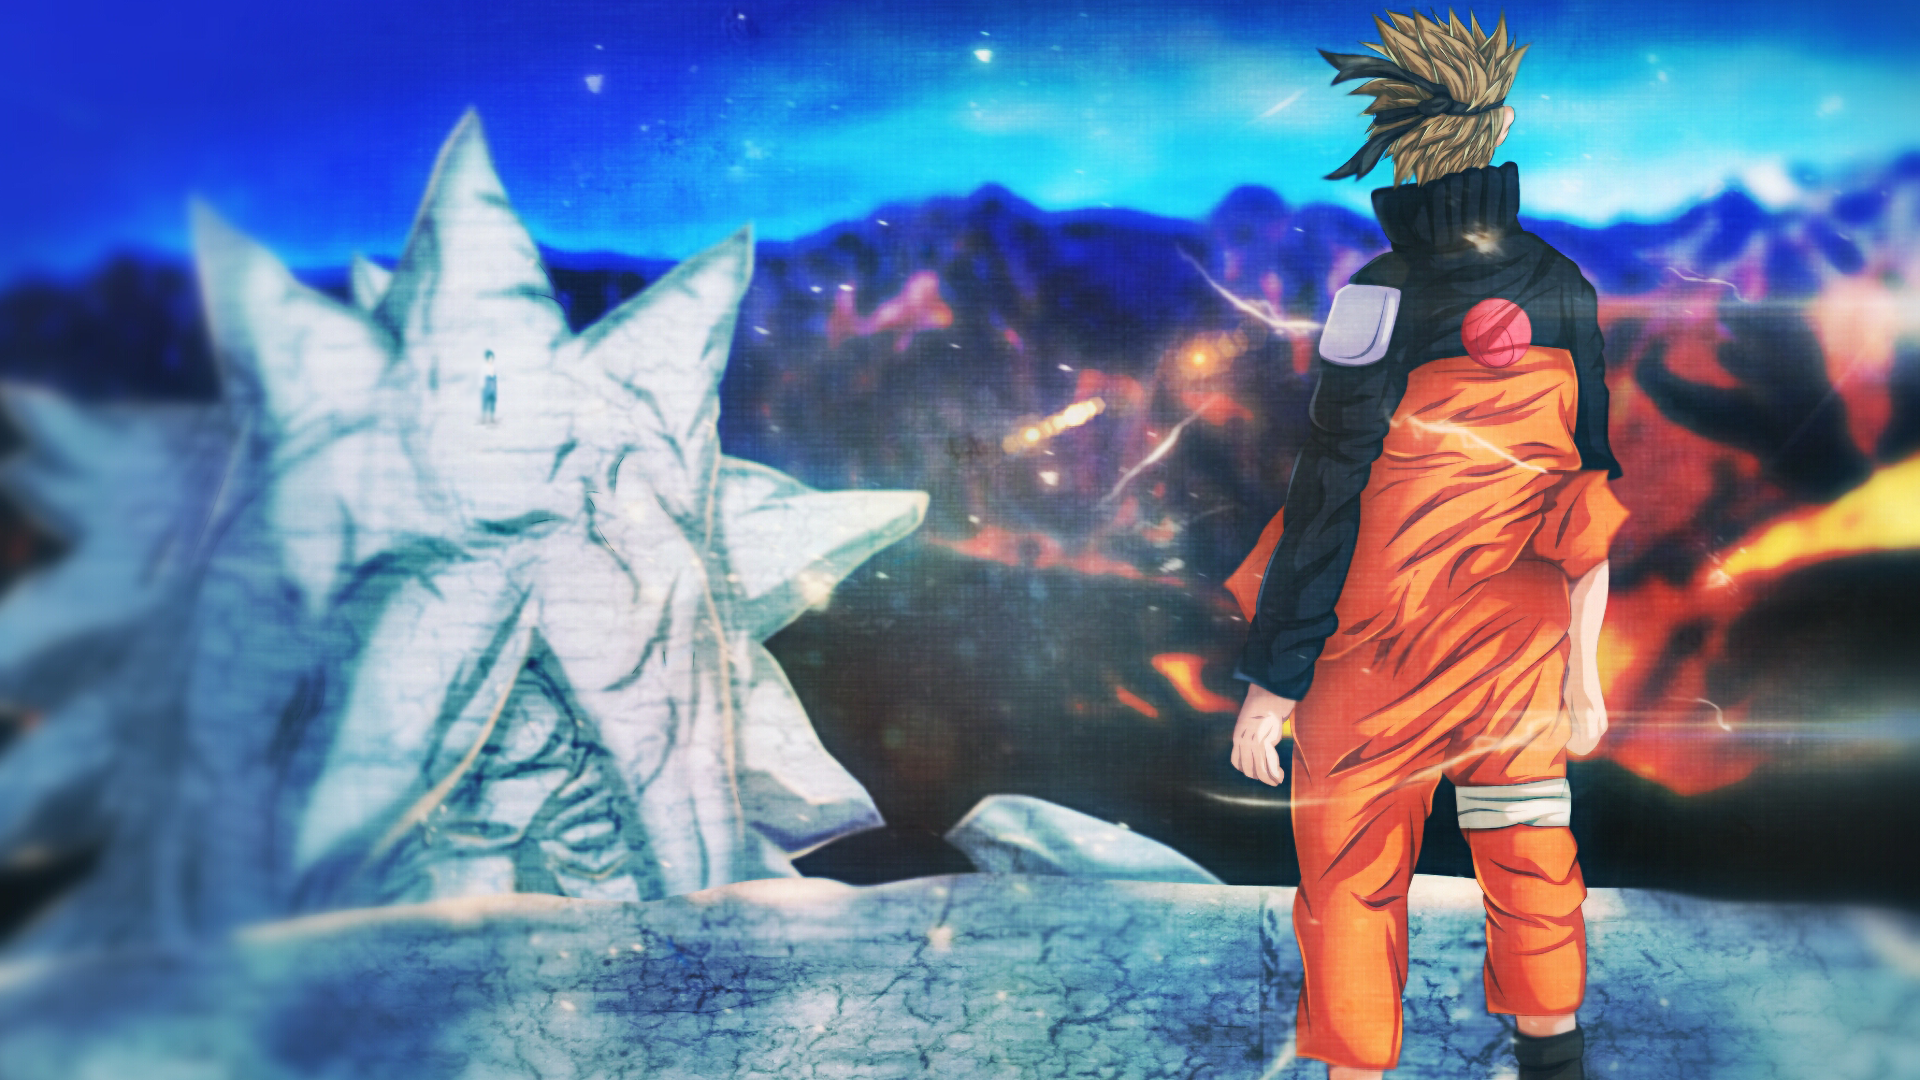 Naruto vs Sasuke HD Wallpaper | Background Image ...